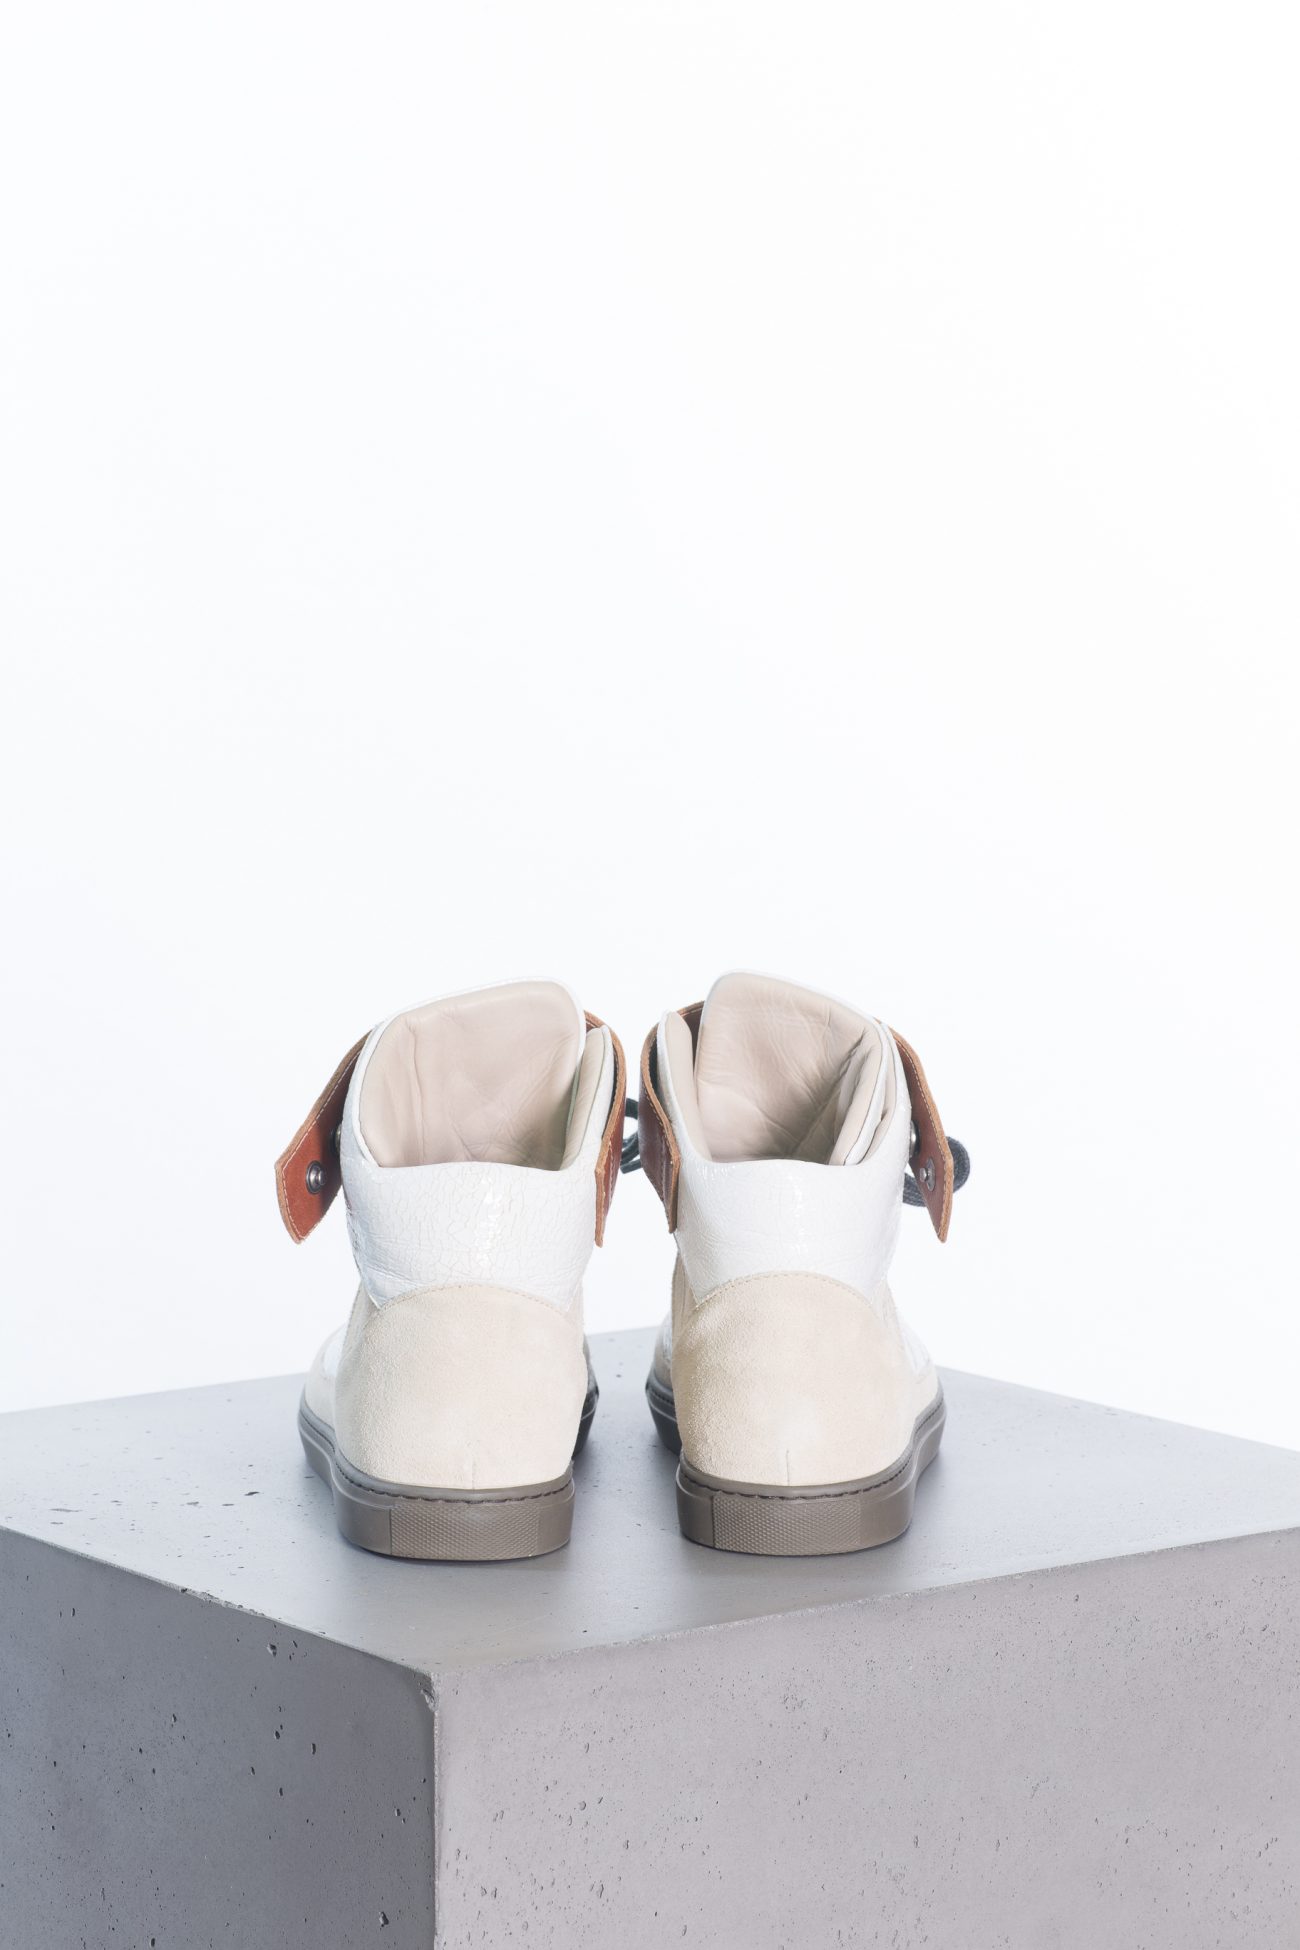 Brunello Cucinelli shoes, 38.5